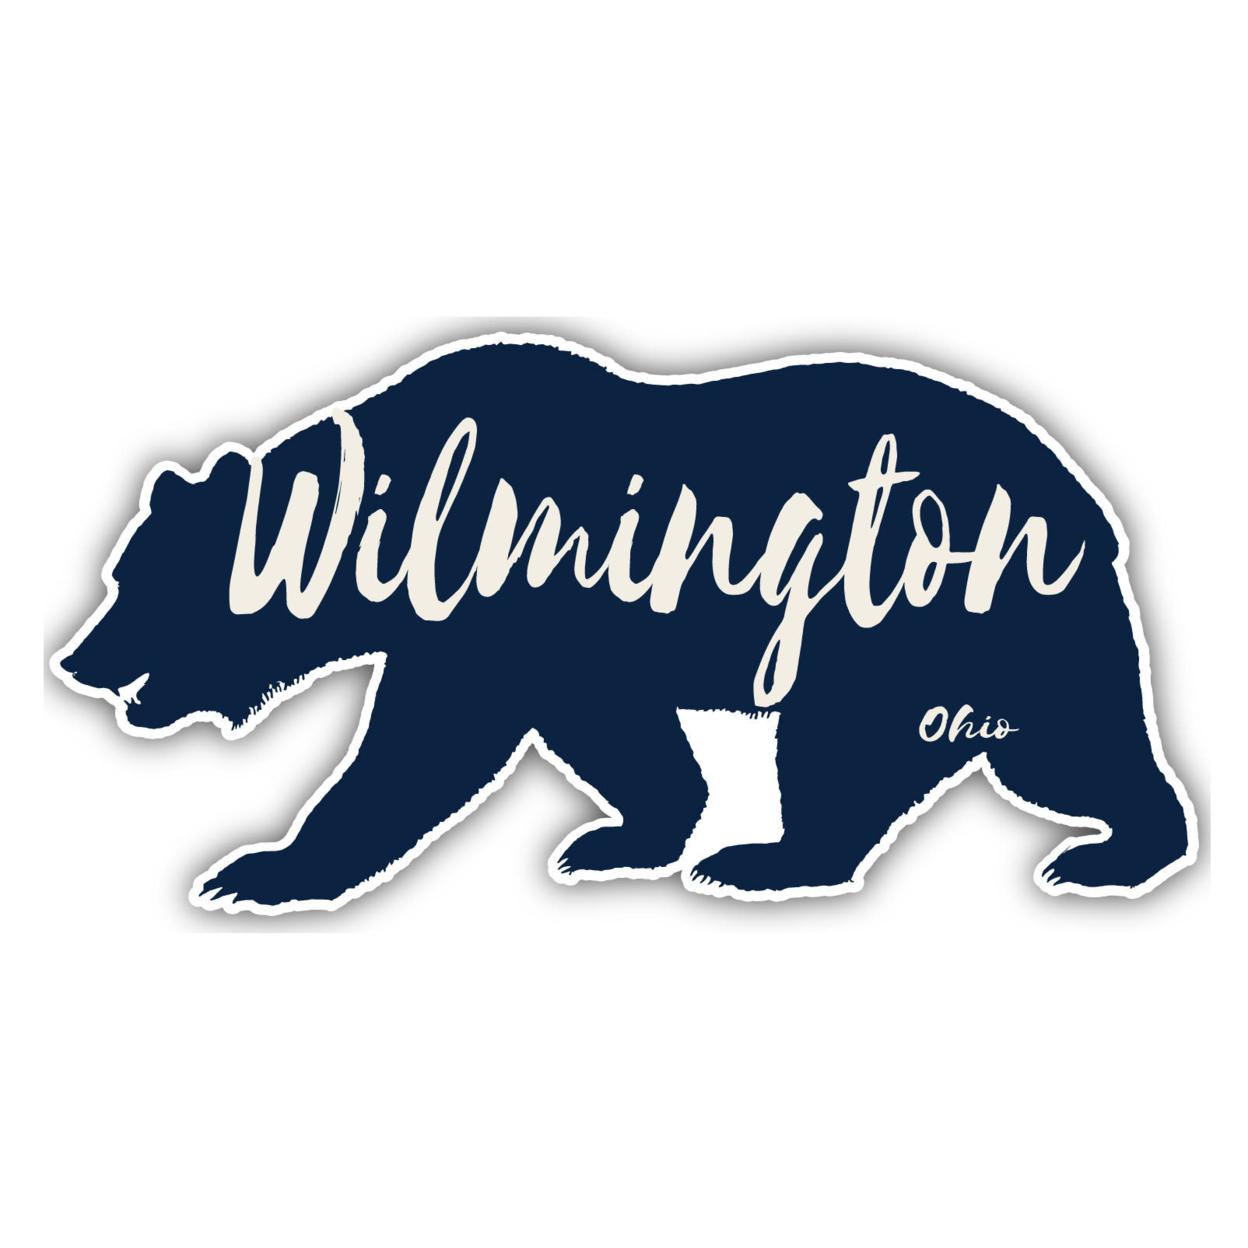 Wilmington Ohio Souvenir Decorative Stickers (Choose Theme And Size) - Single Unit, 2-Inch, Bear